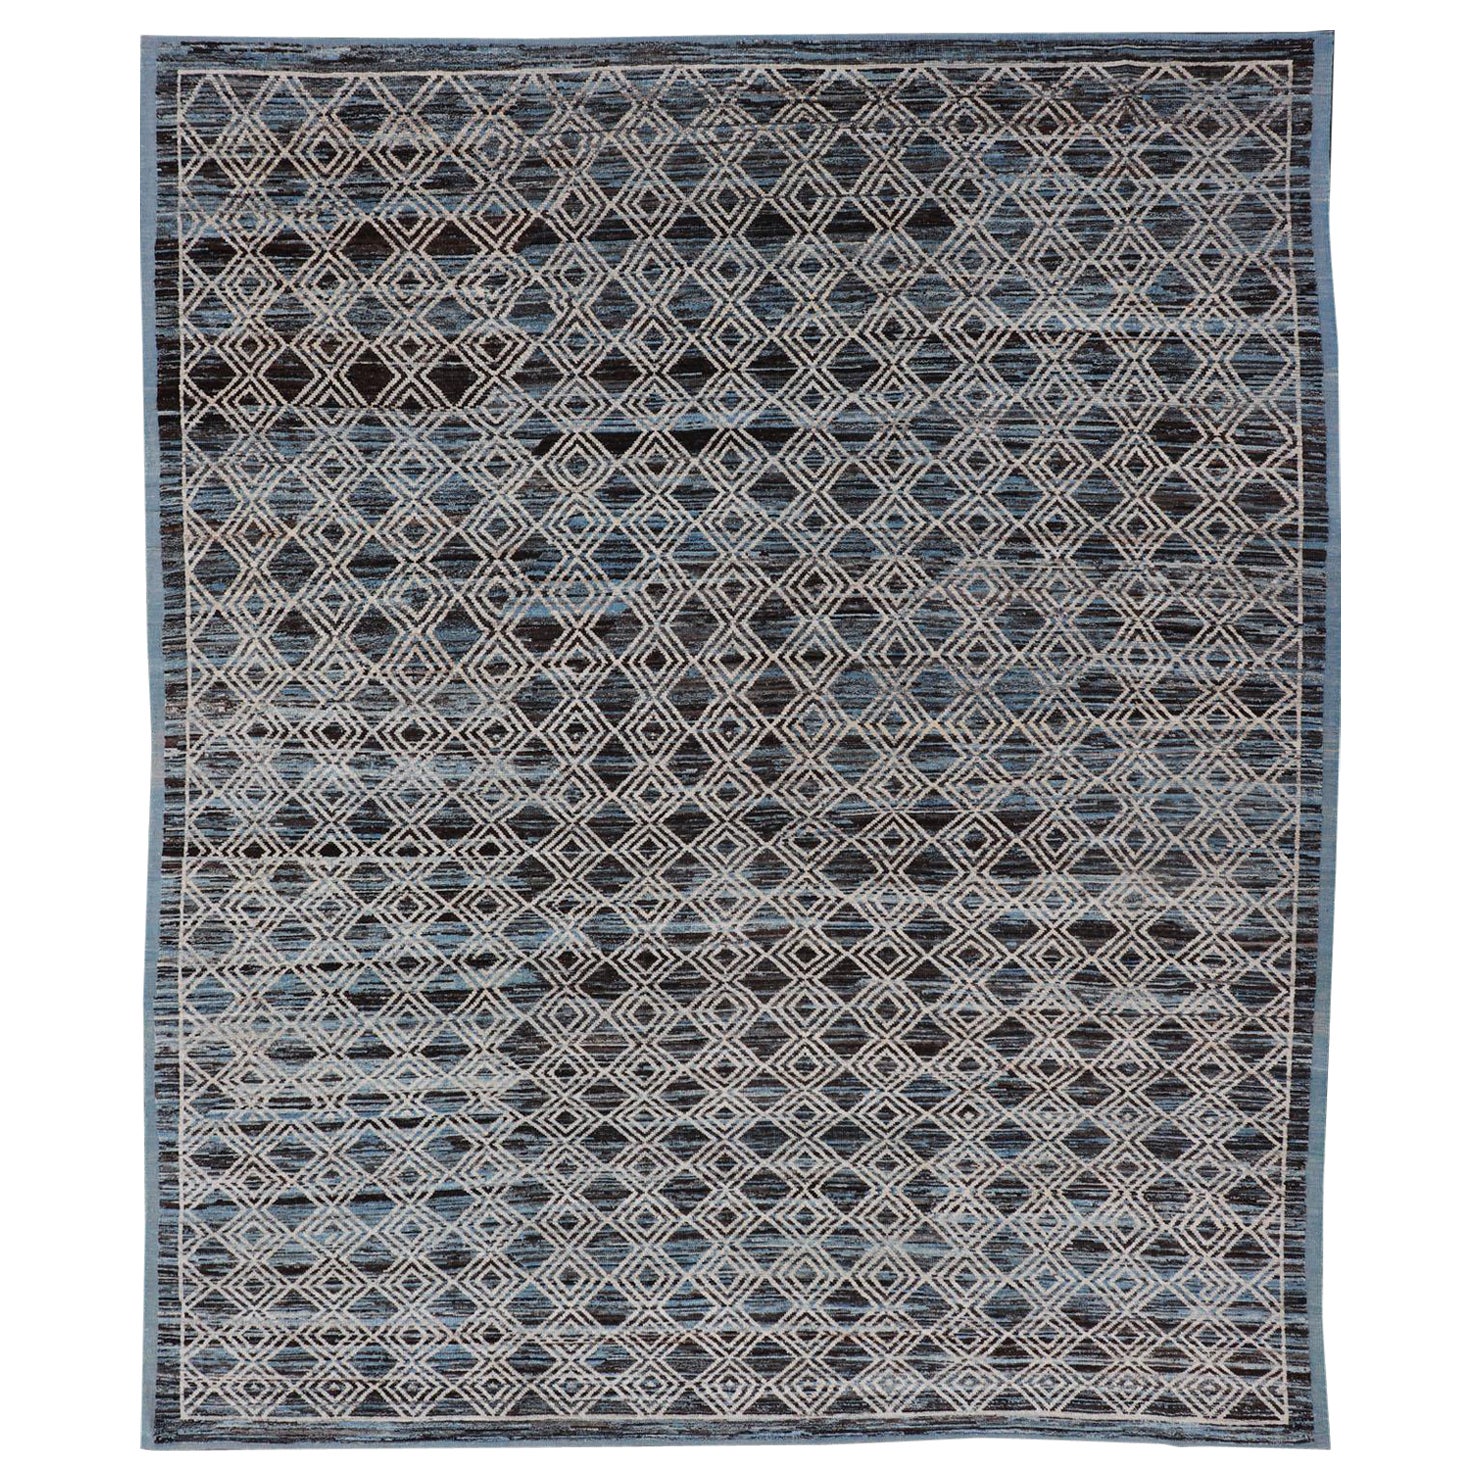 Blue, Charcoal, Gray and Brown Afghan Modern Geometric Design Rug